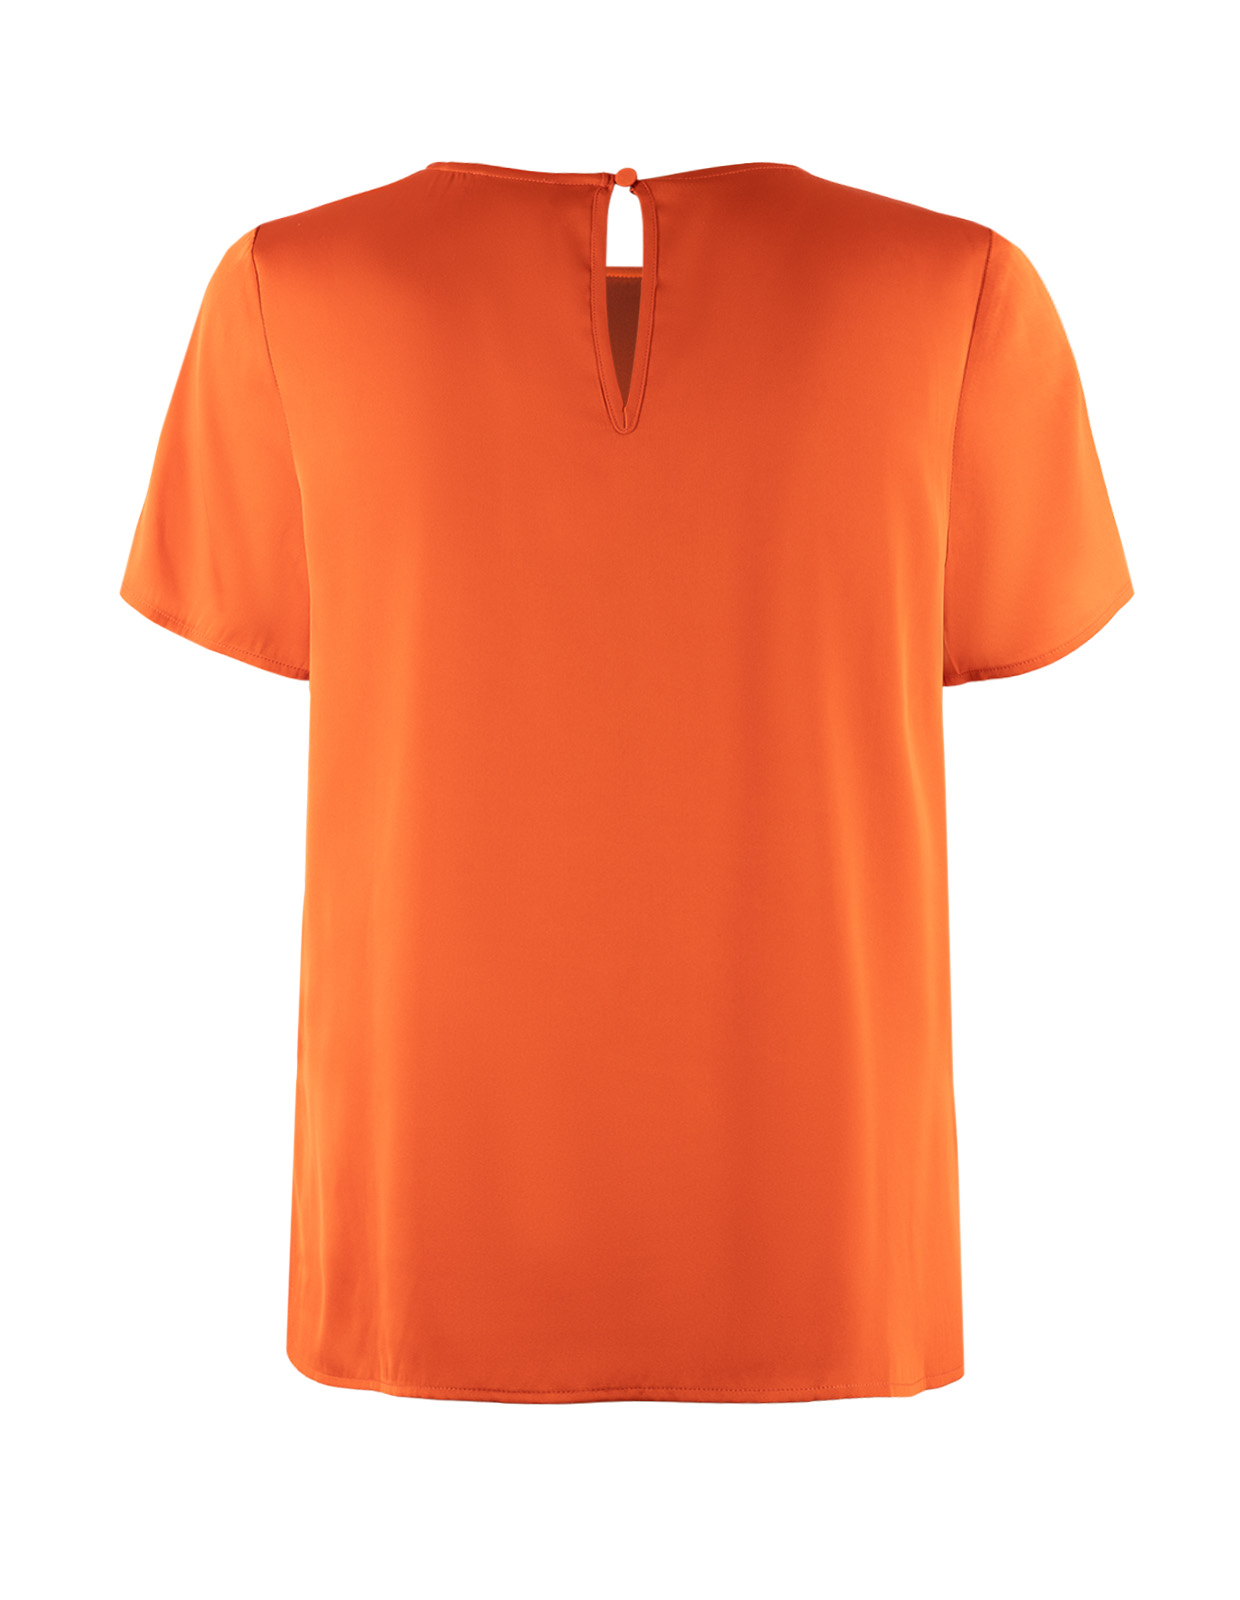 Lorna T-shirt Siden Orange Stl 36